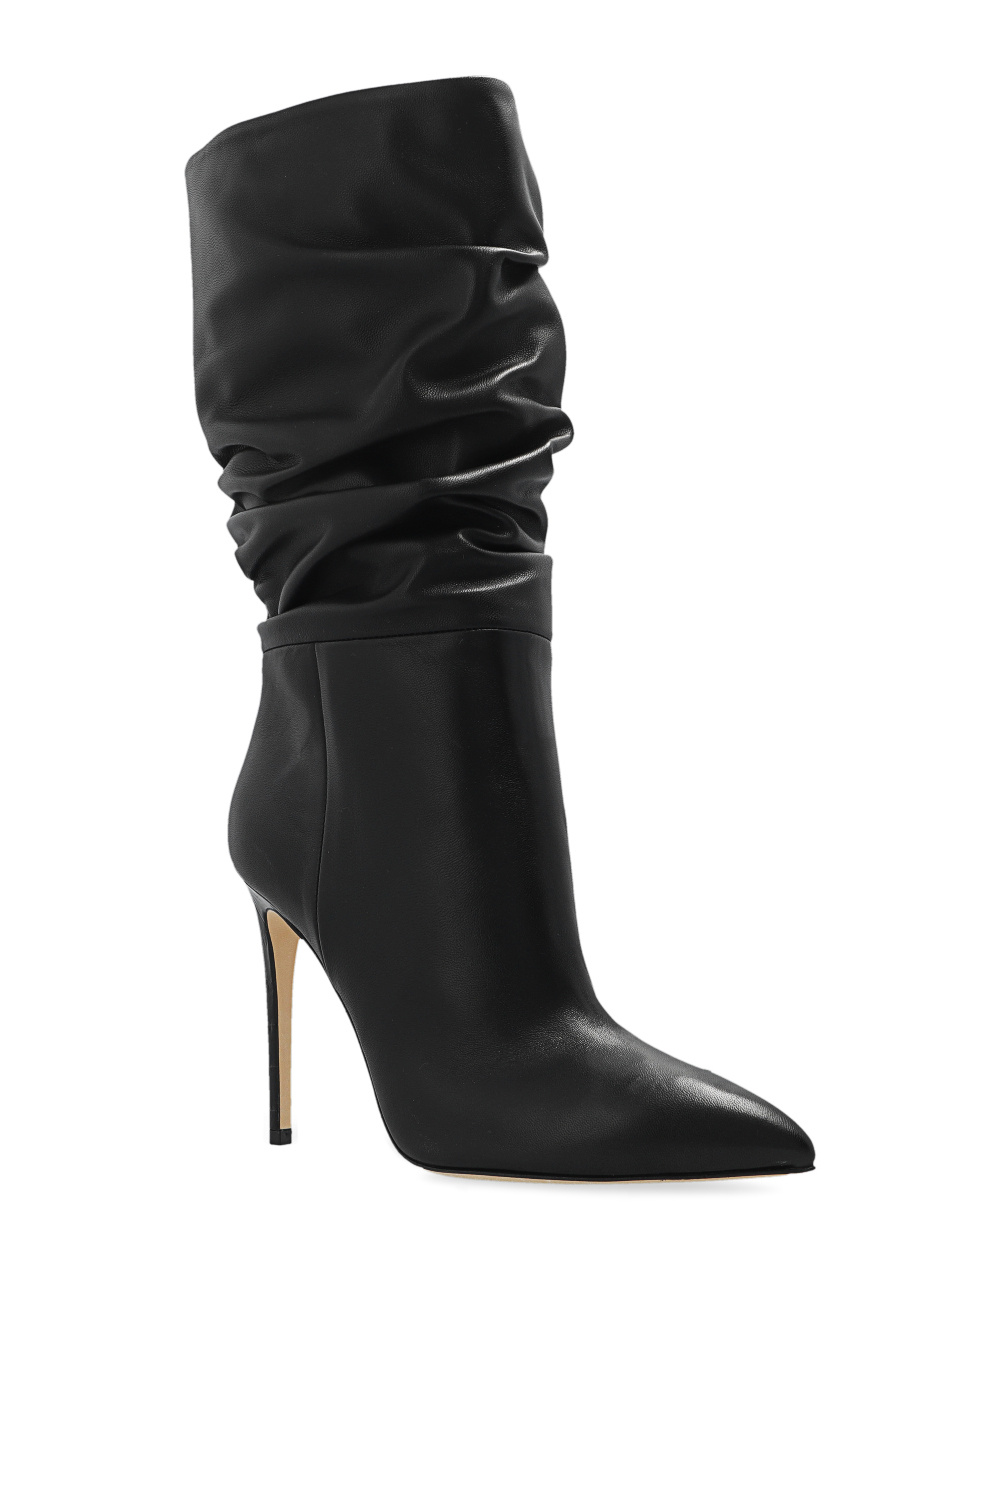 Paris Texas 1-009467-2000 heeled boots